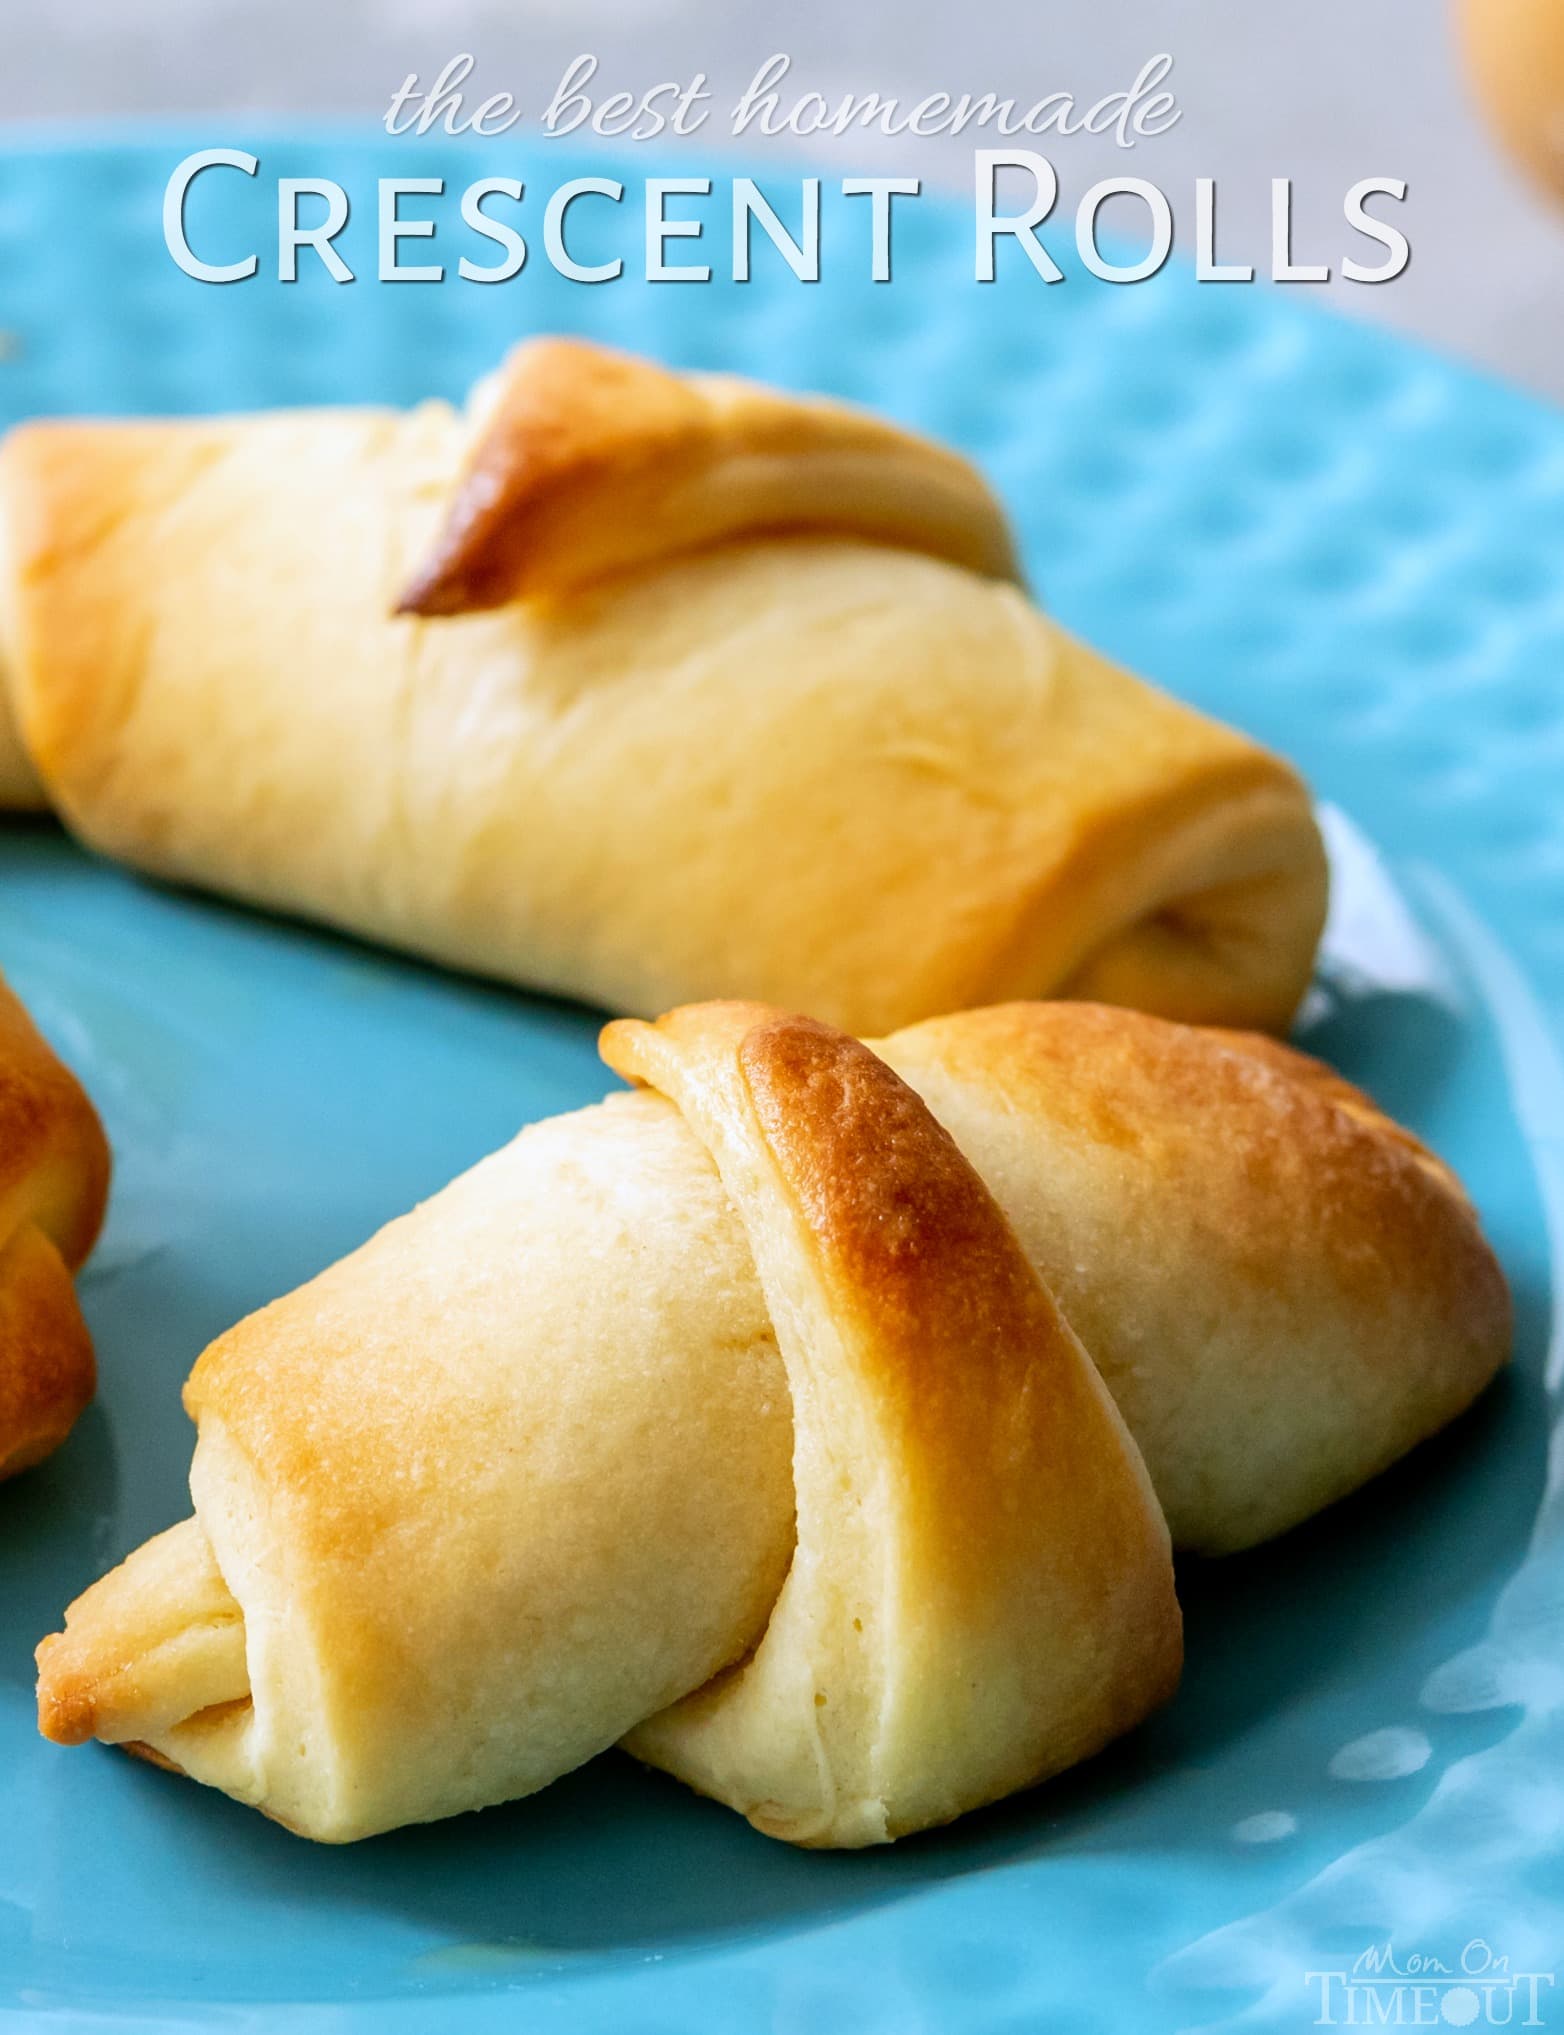 https://www.momontimeout.com/wp-content/uploads/2011/11/crescent-rolls-recipe-title.jpg